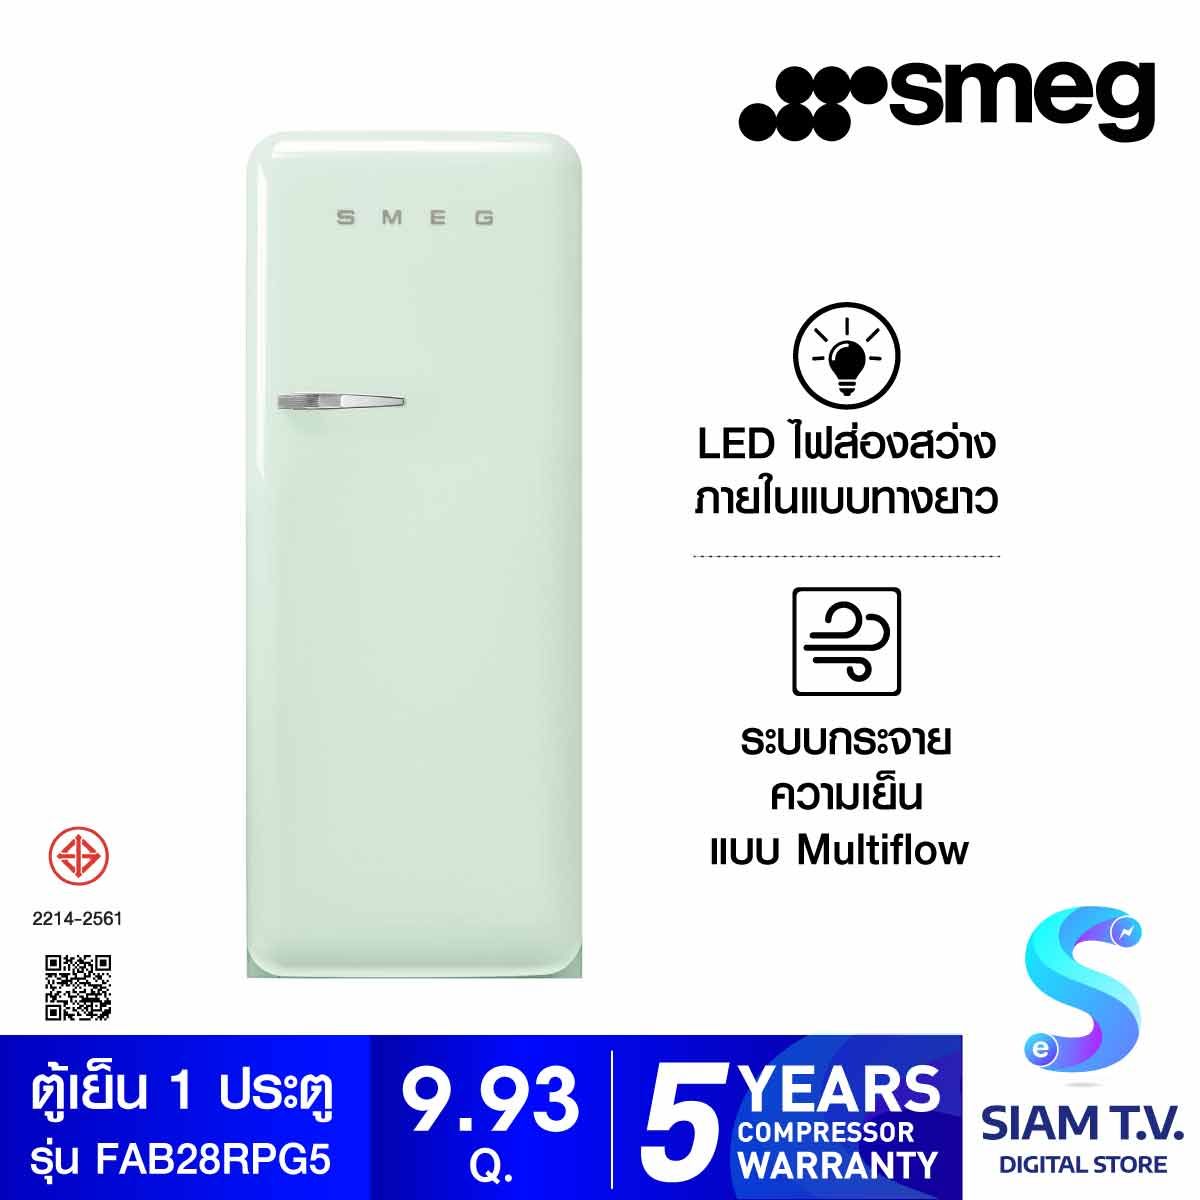 SMEG ตู้เย็น 1 ประตู 9.93 Q. สไตล์ 50 Retro Aesthetic รุ่น FAB28RPG5 สีเขียวพาสเทล